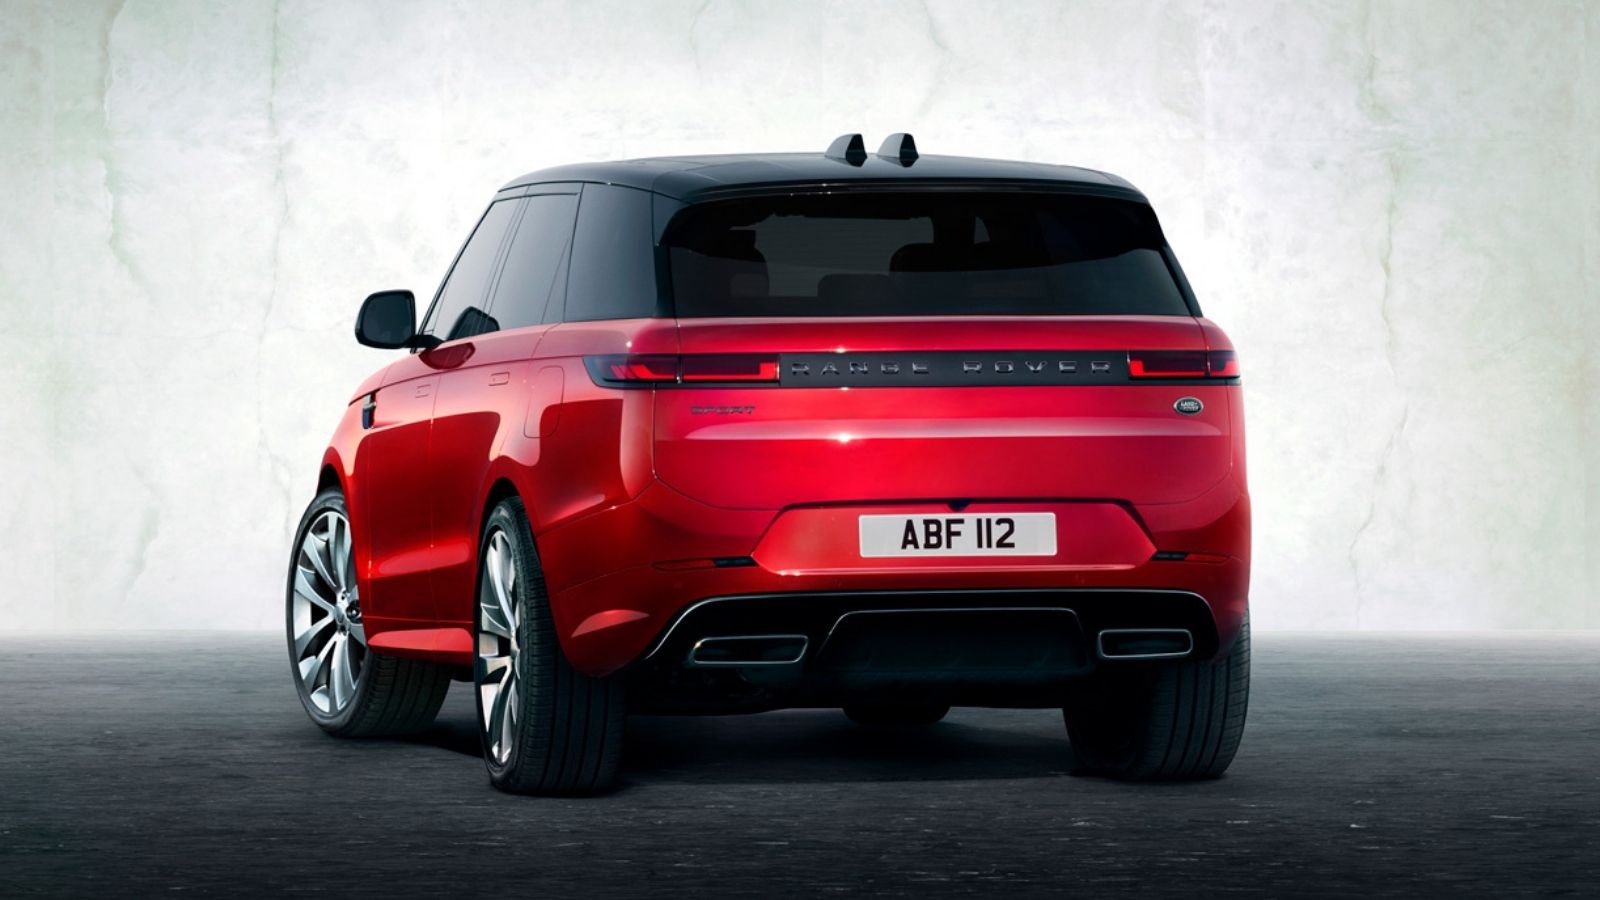 Range Rover Sport: আরও ফিচার, আরও প্রযুক্তি, আসছে রেঞ্জ রোভার স্পোর্টস